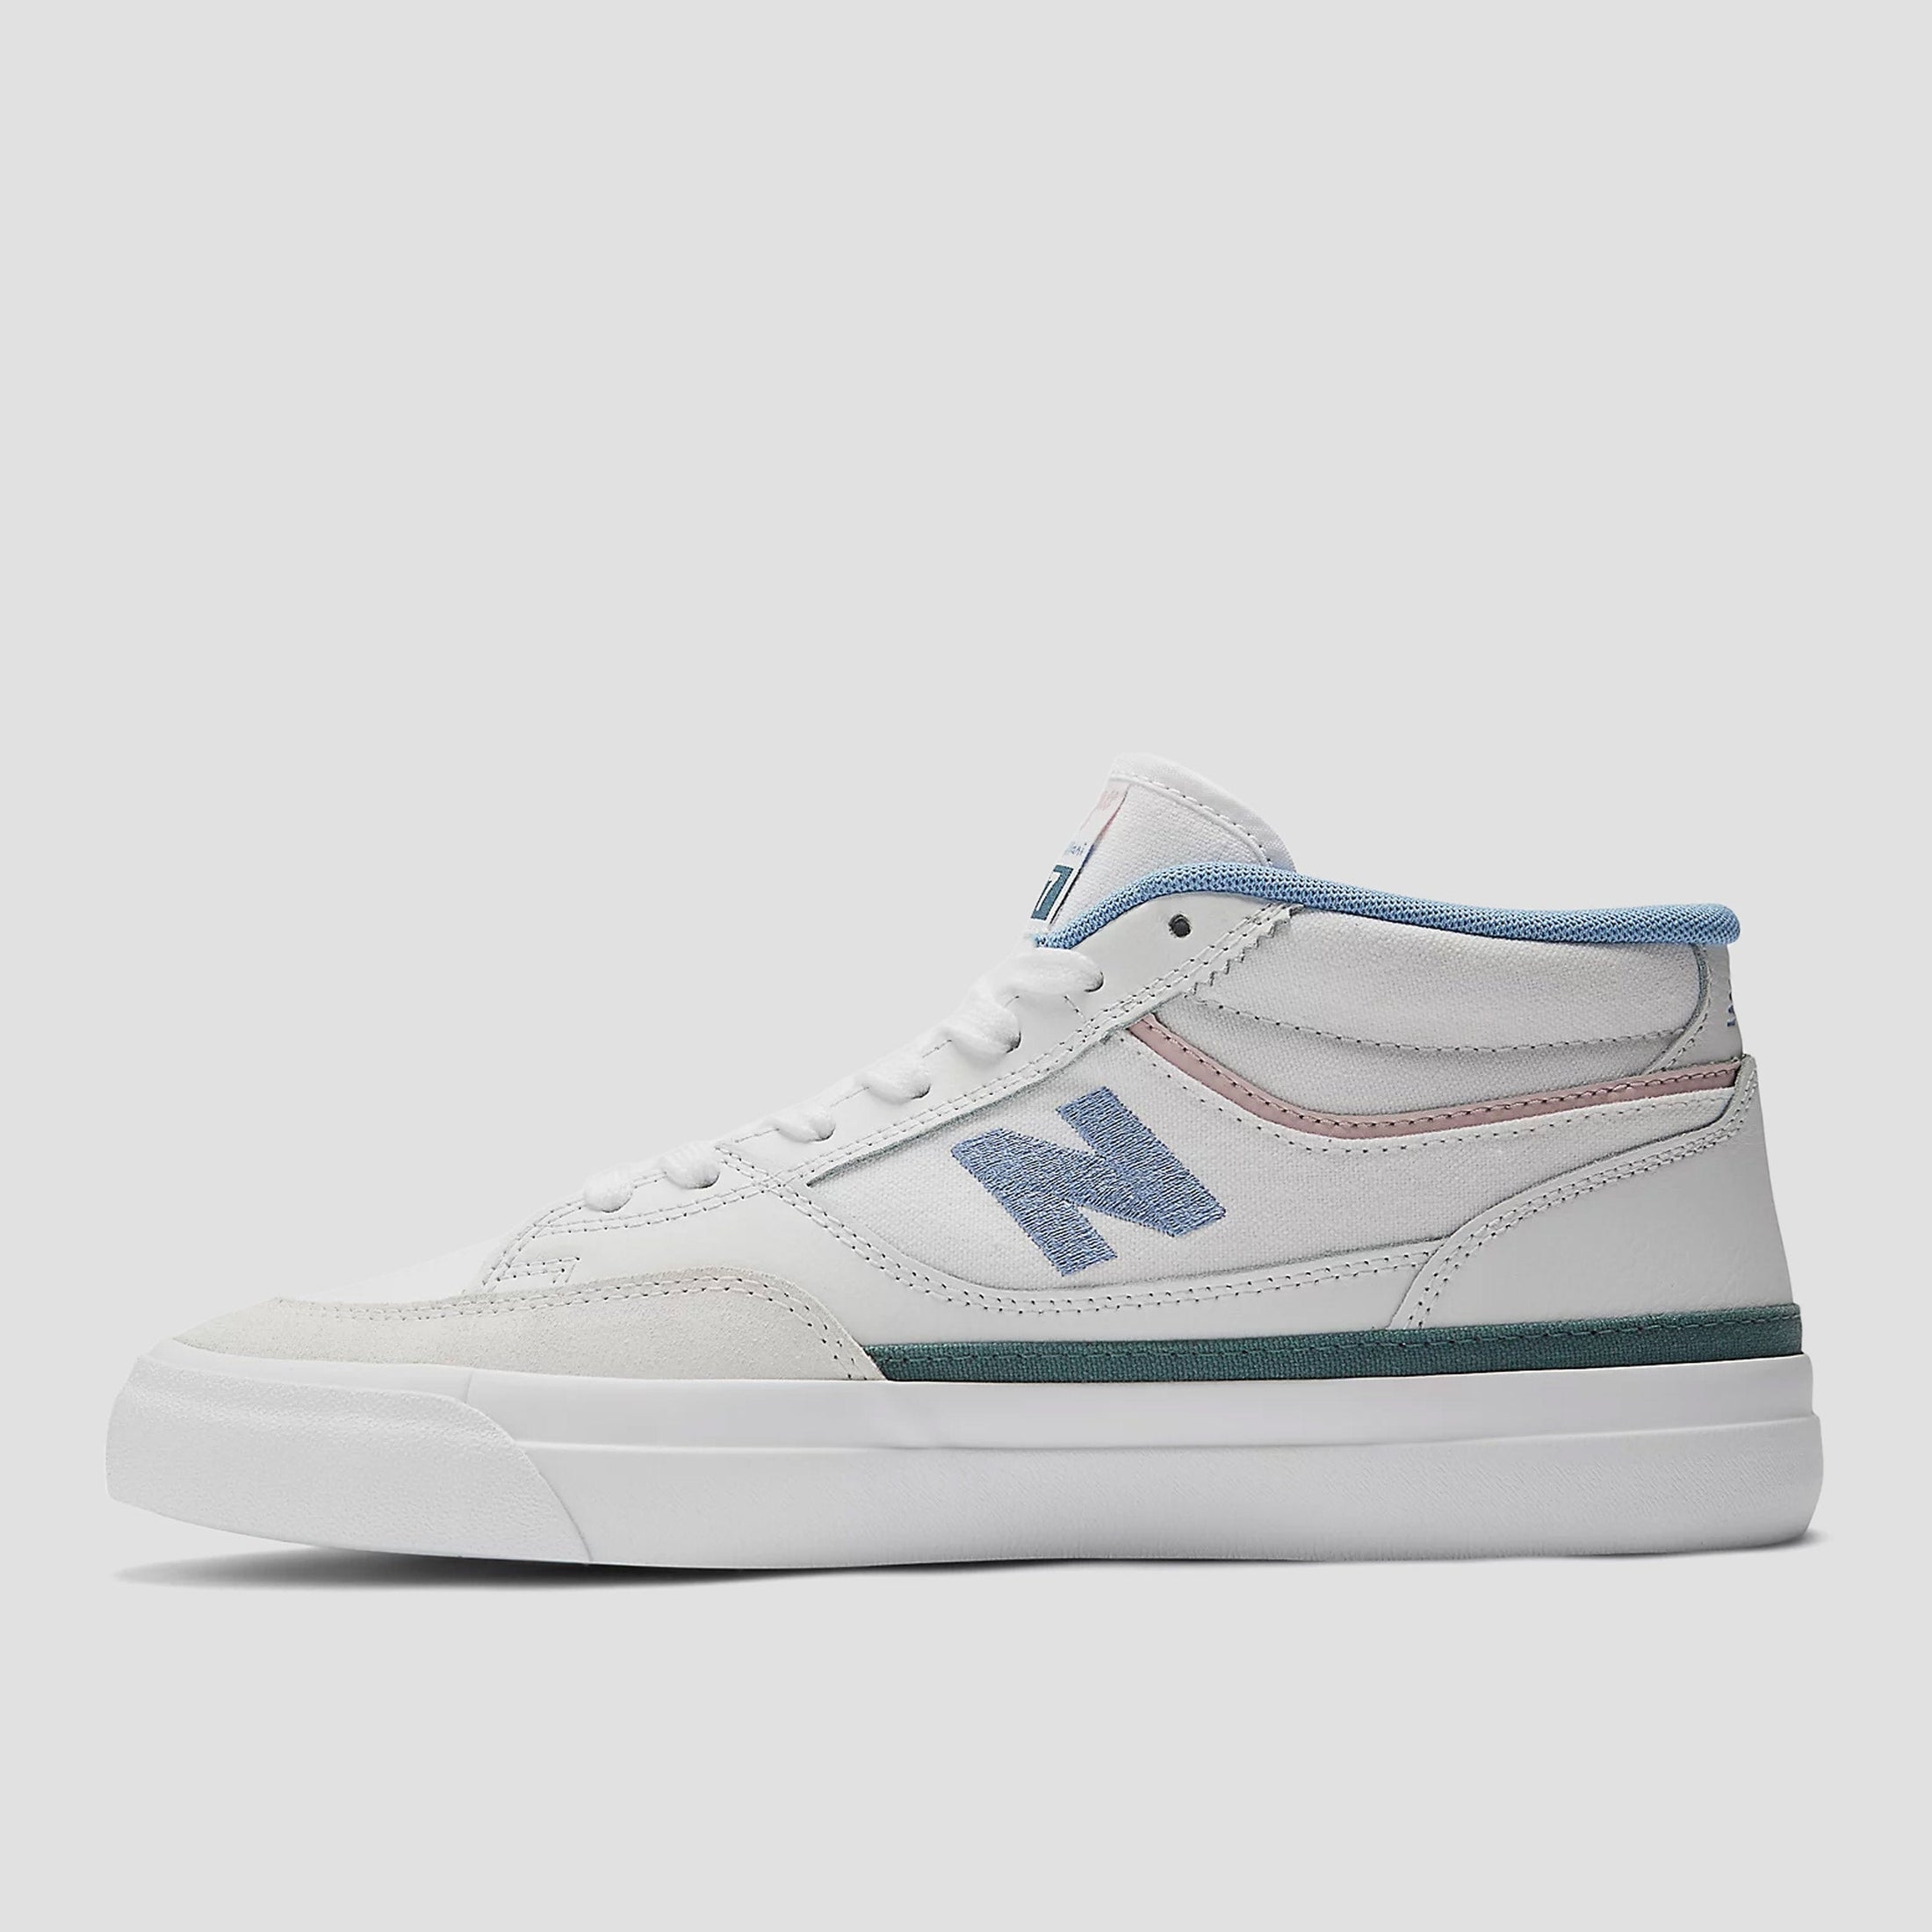 New Balance 417 Skate Shoes White / Blue Laguna